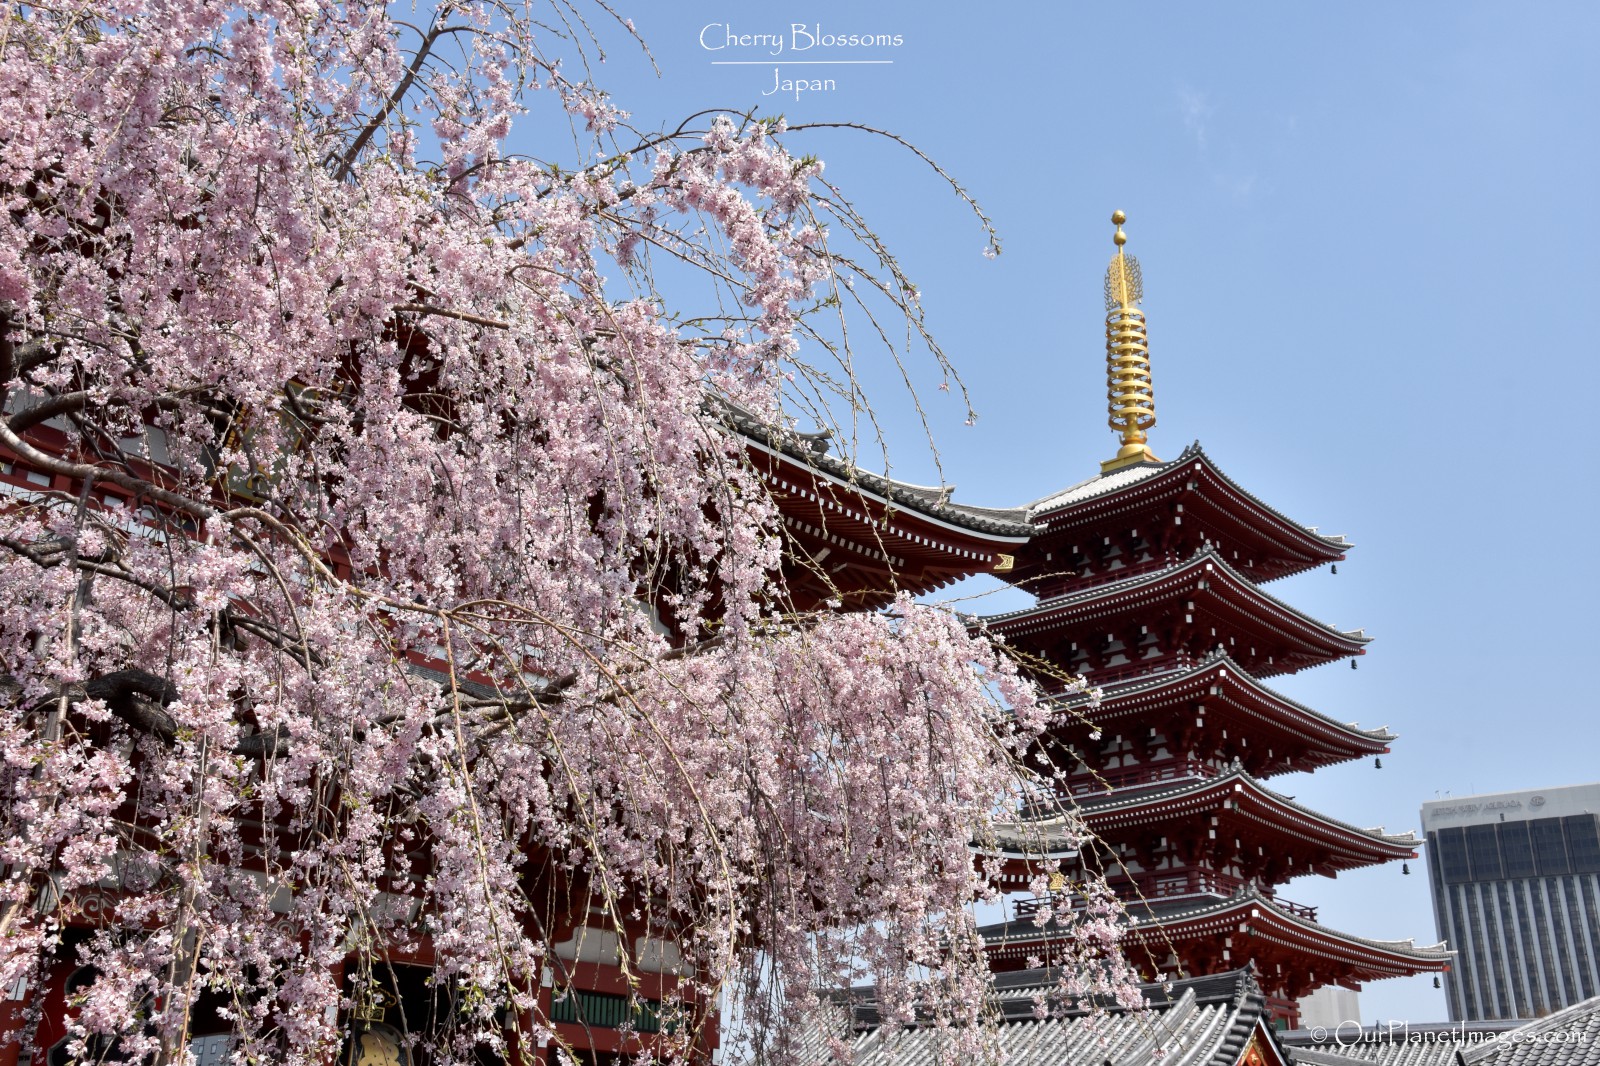 Cherry Blossoms - Japan